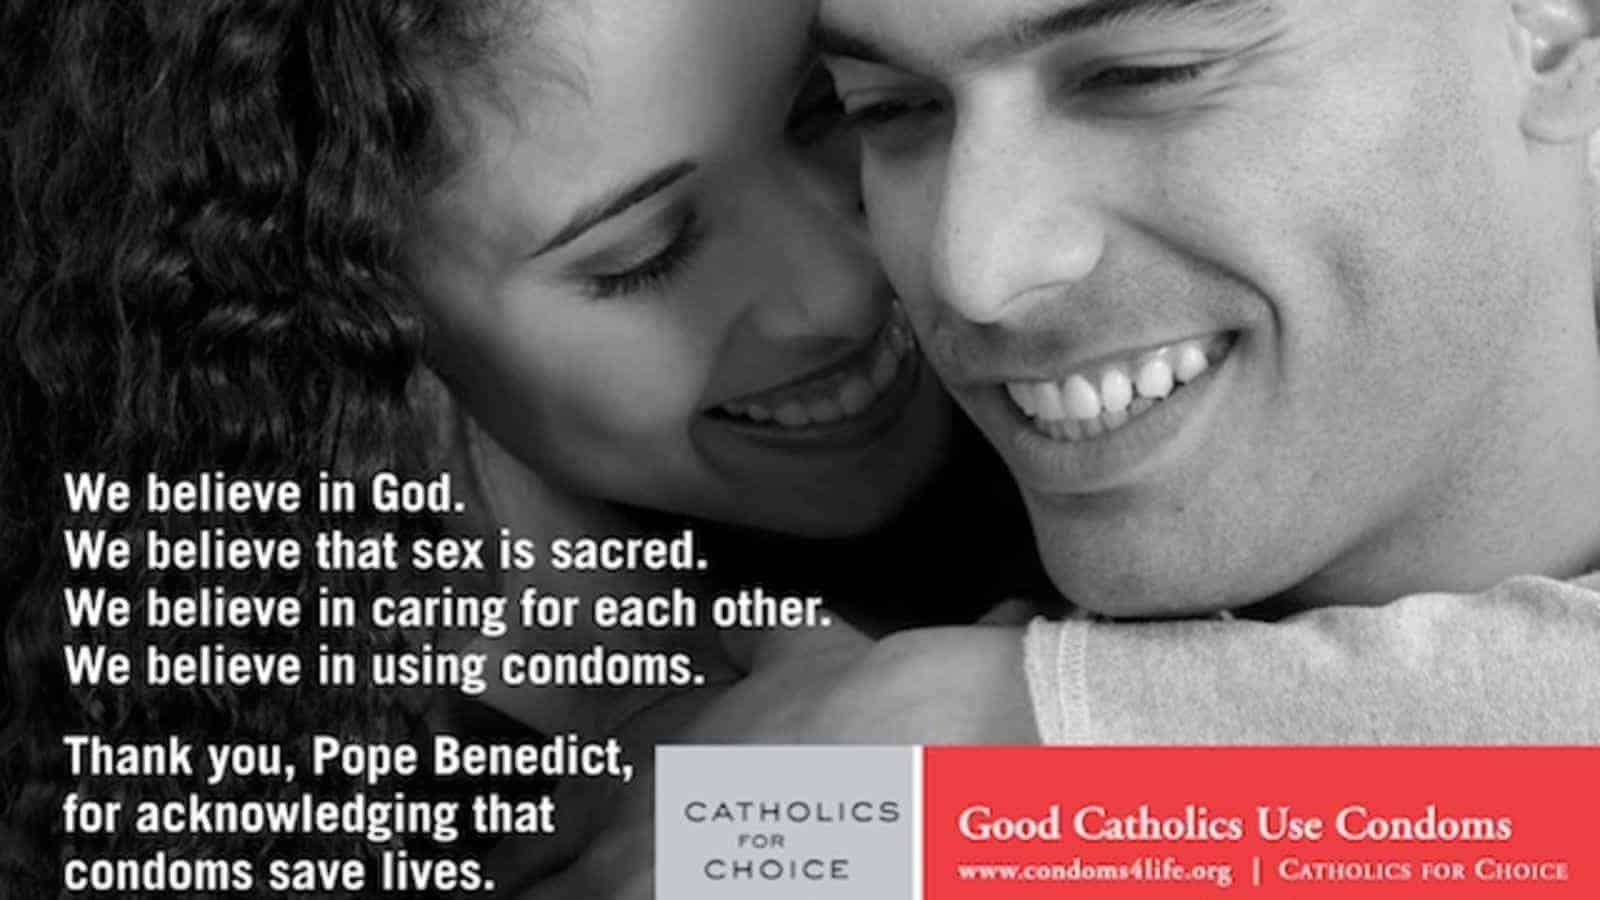 Can Catholics Use Condoms?